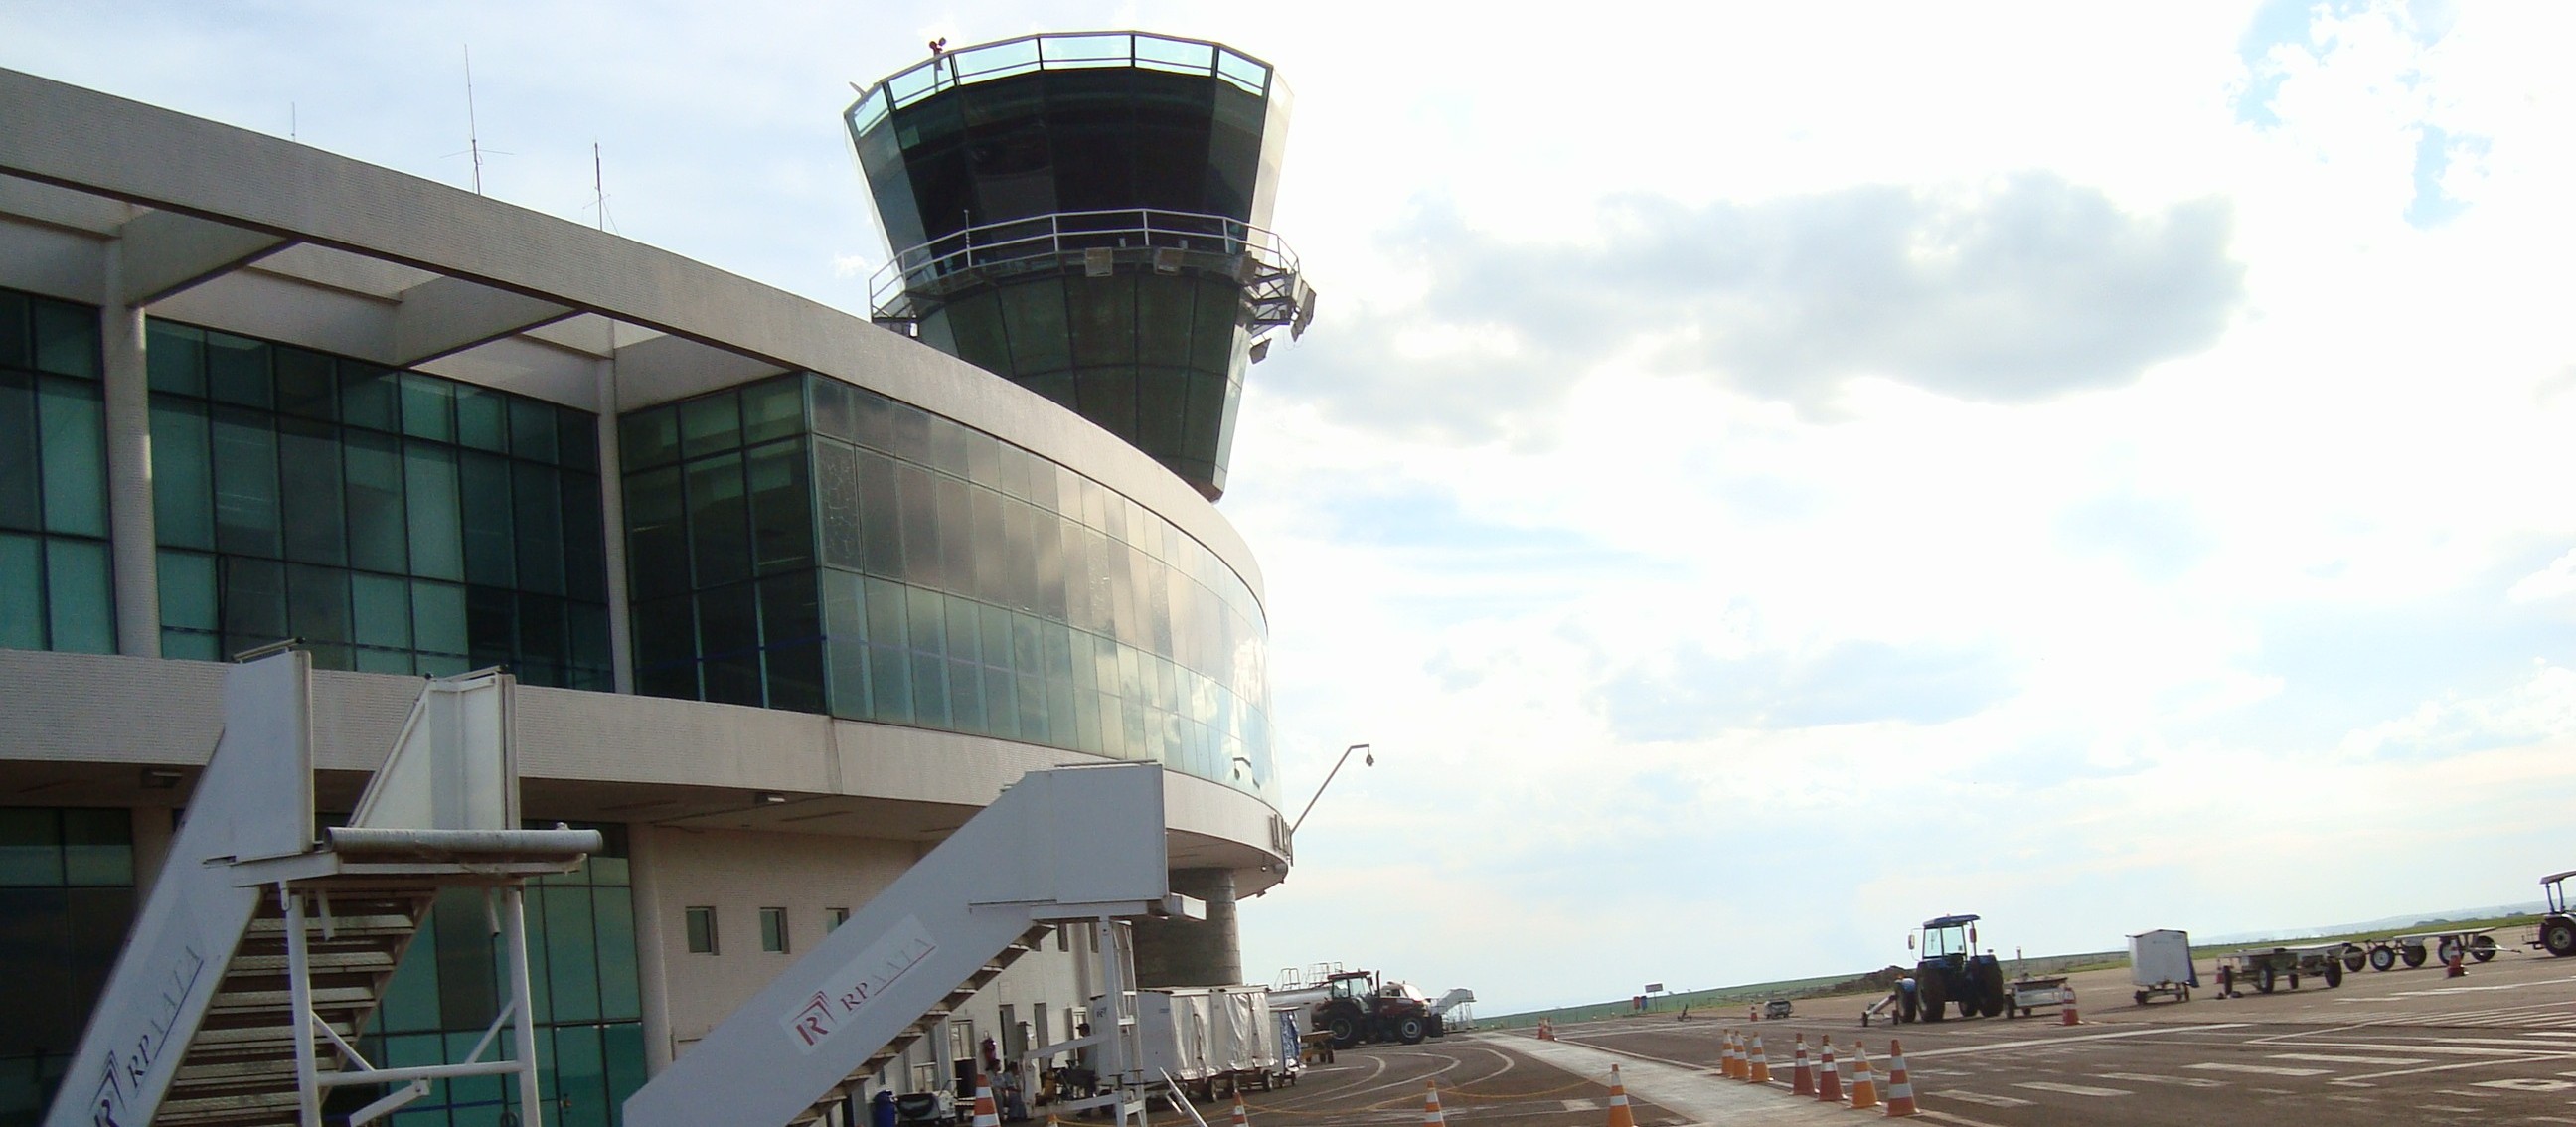 SAC autoriza abertura de licitação para ampliar aeroporto de Maringá